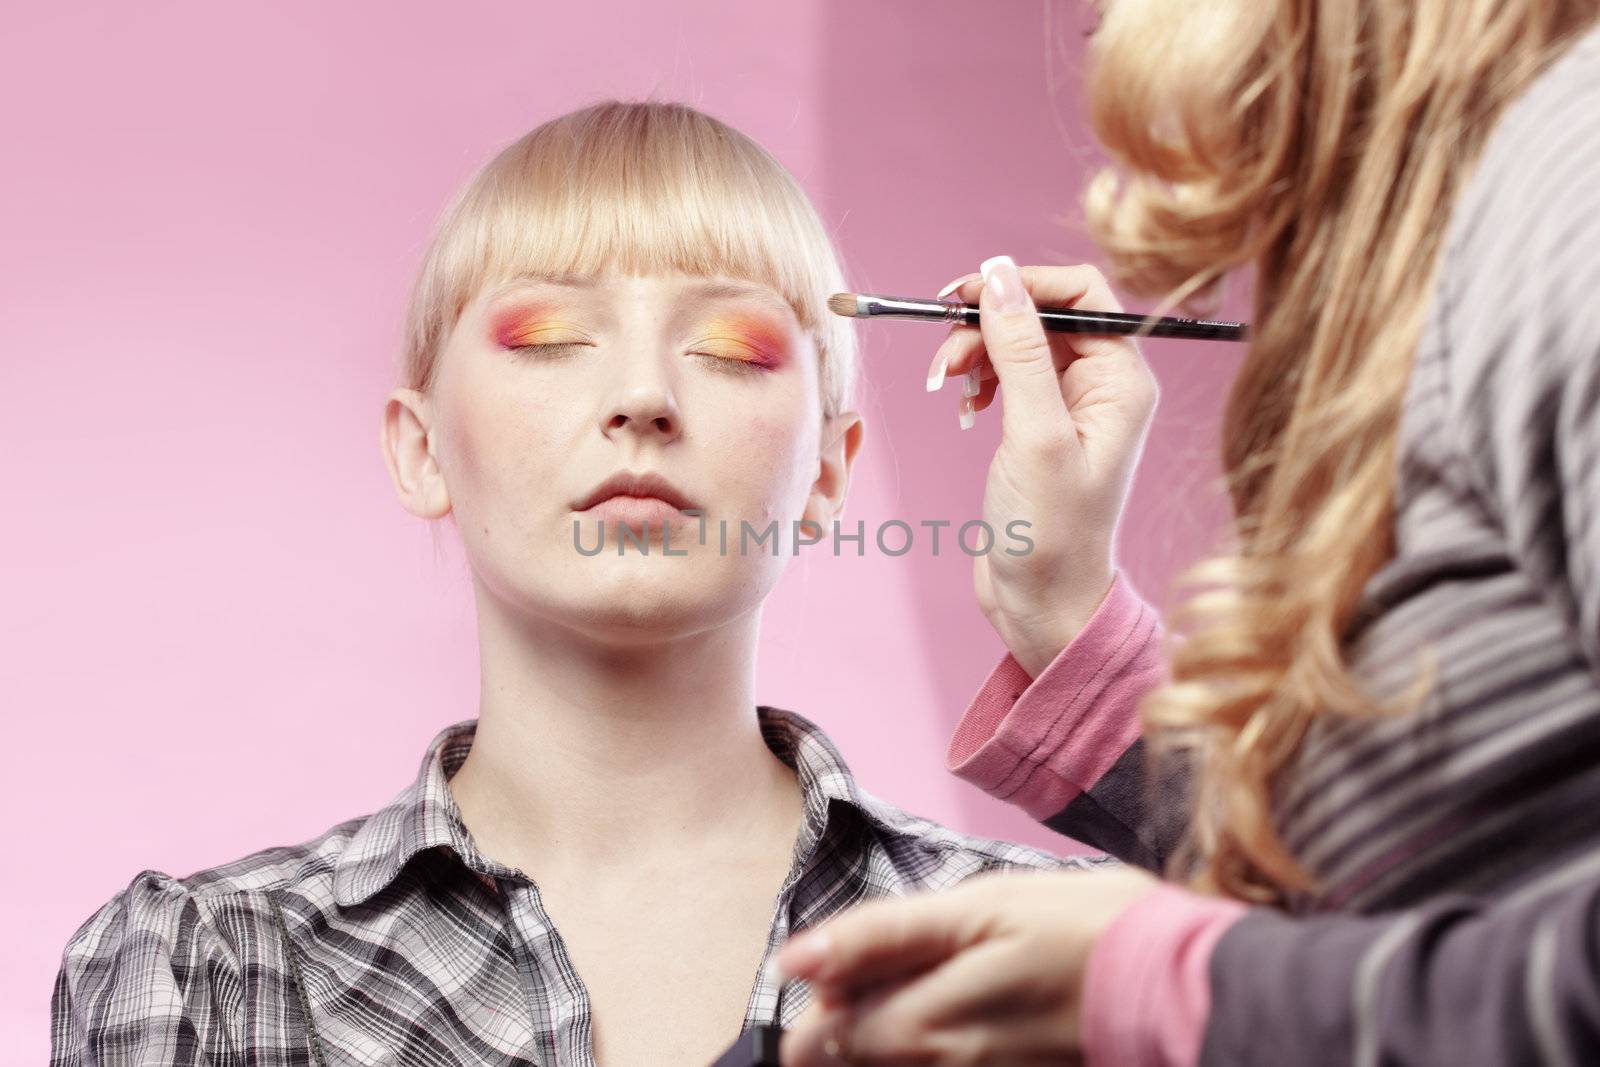 Makeup by alenkasm